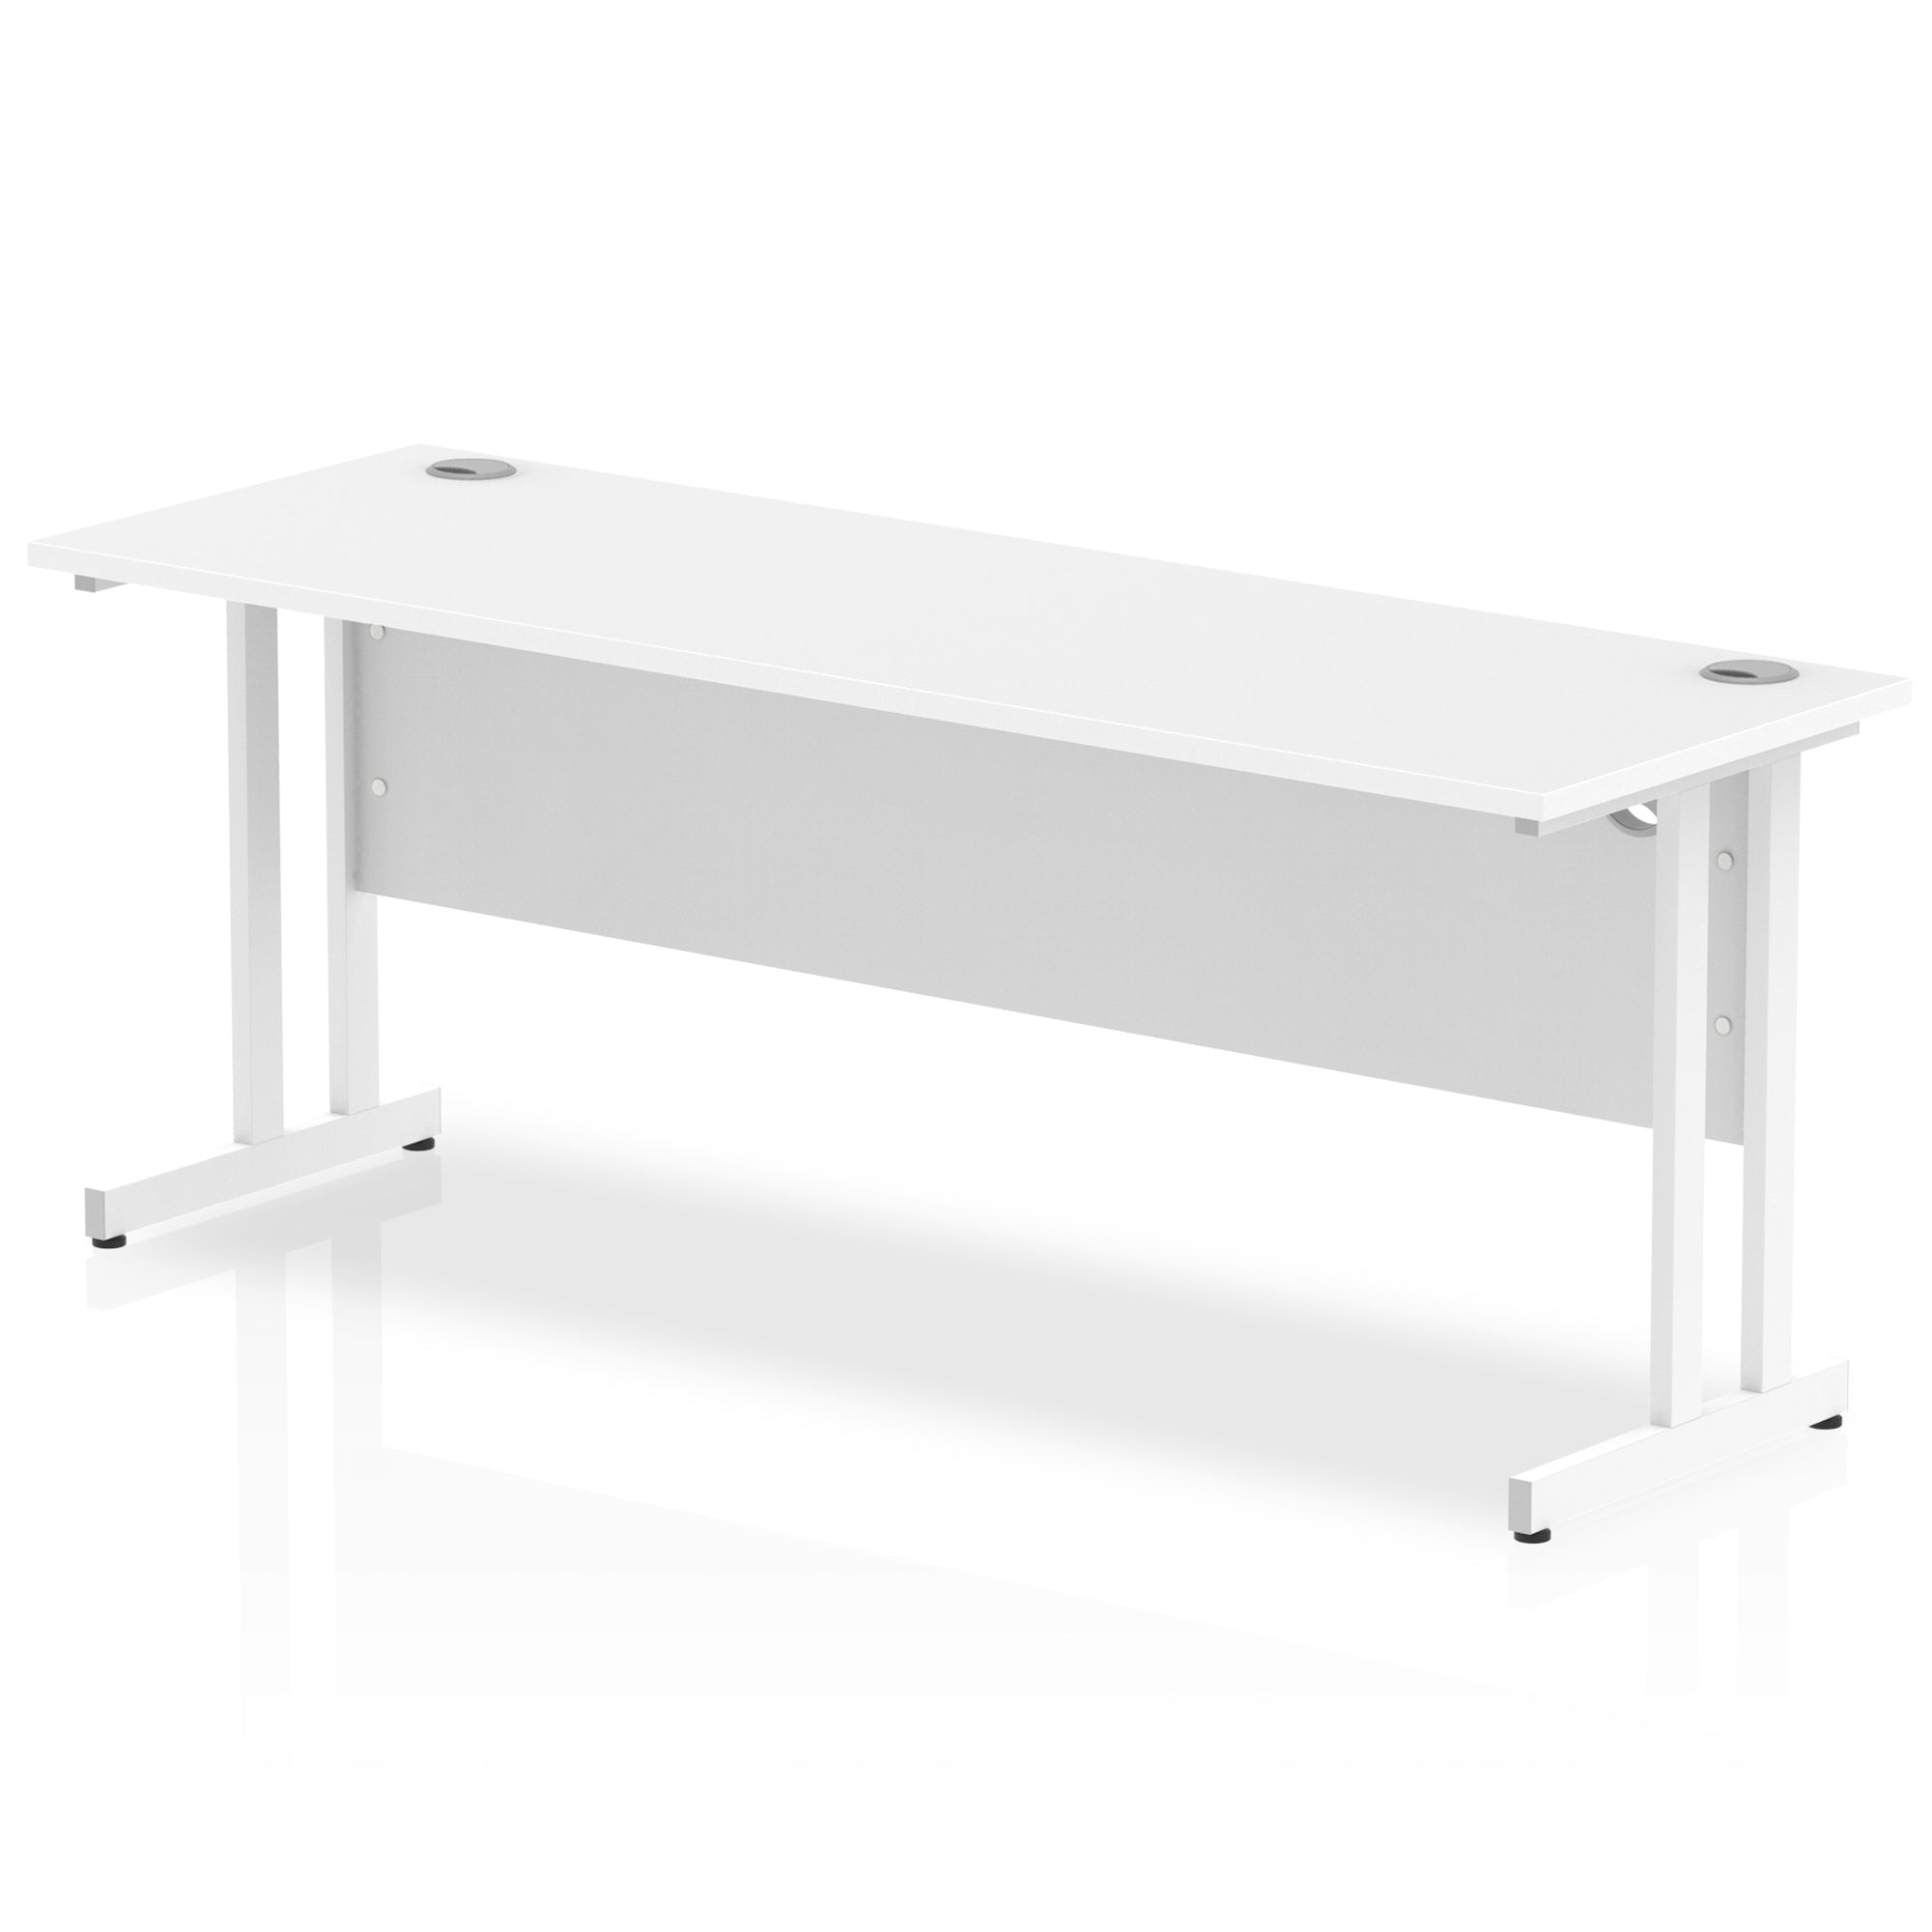 Impulse 1800mm Slimline Desk Cantilever Leg - MFC Rectangular, Self-Assembly, 5-Year Guarantee, Silver/White/Black Frame, 1800x600 Top